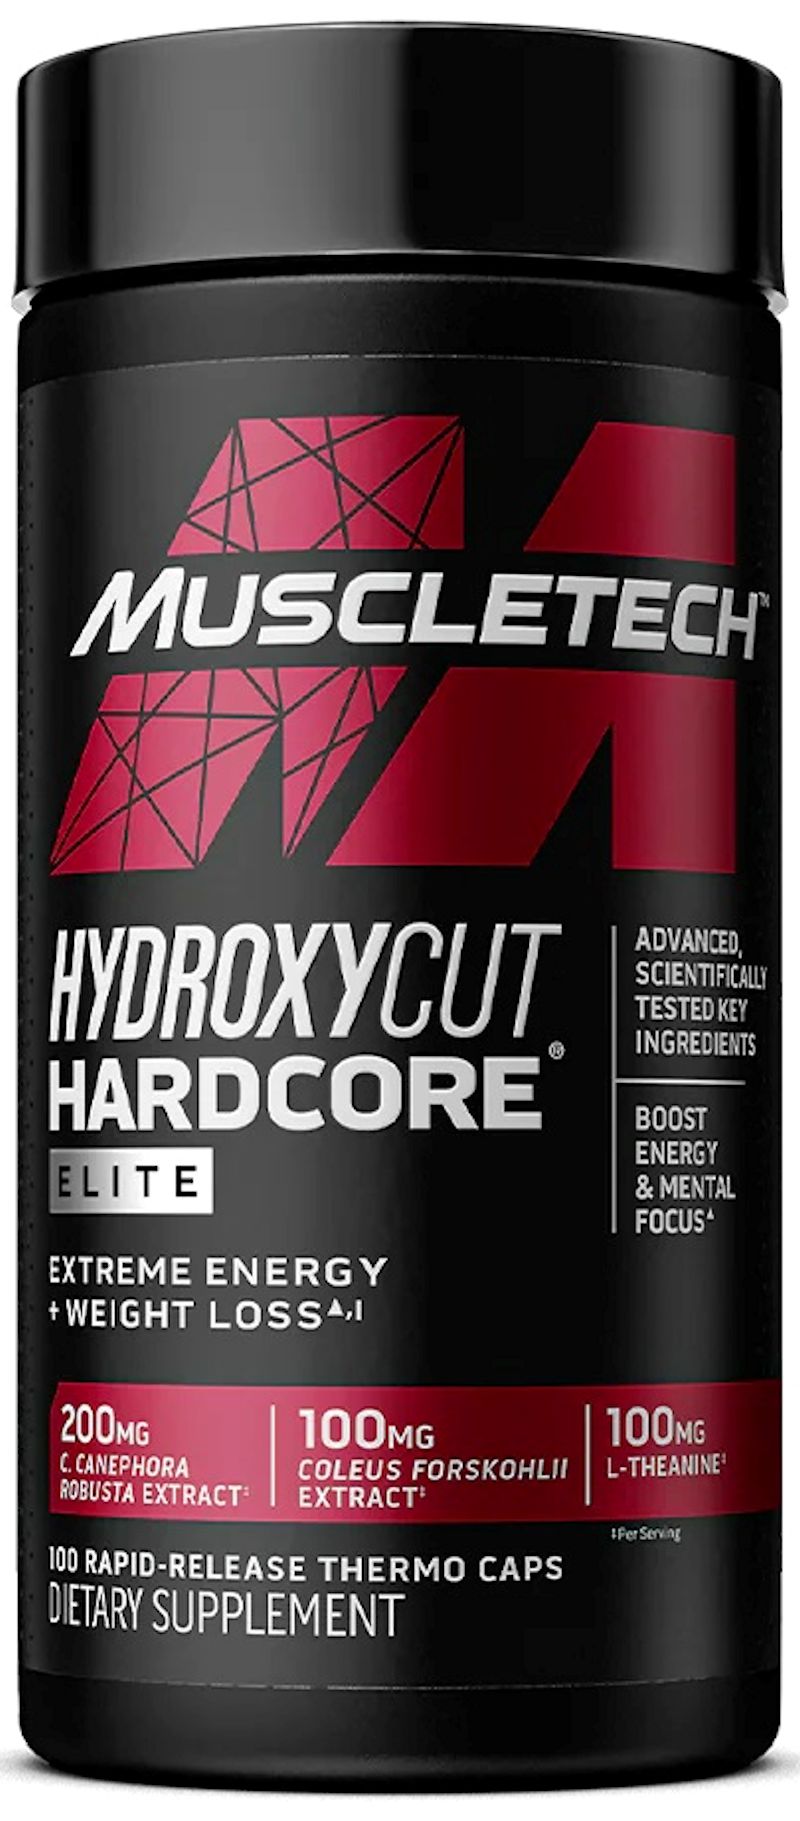 MuscleTech Hydroxycut Hardcore Elite caps